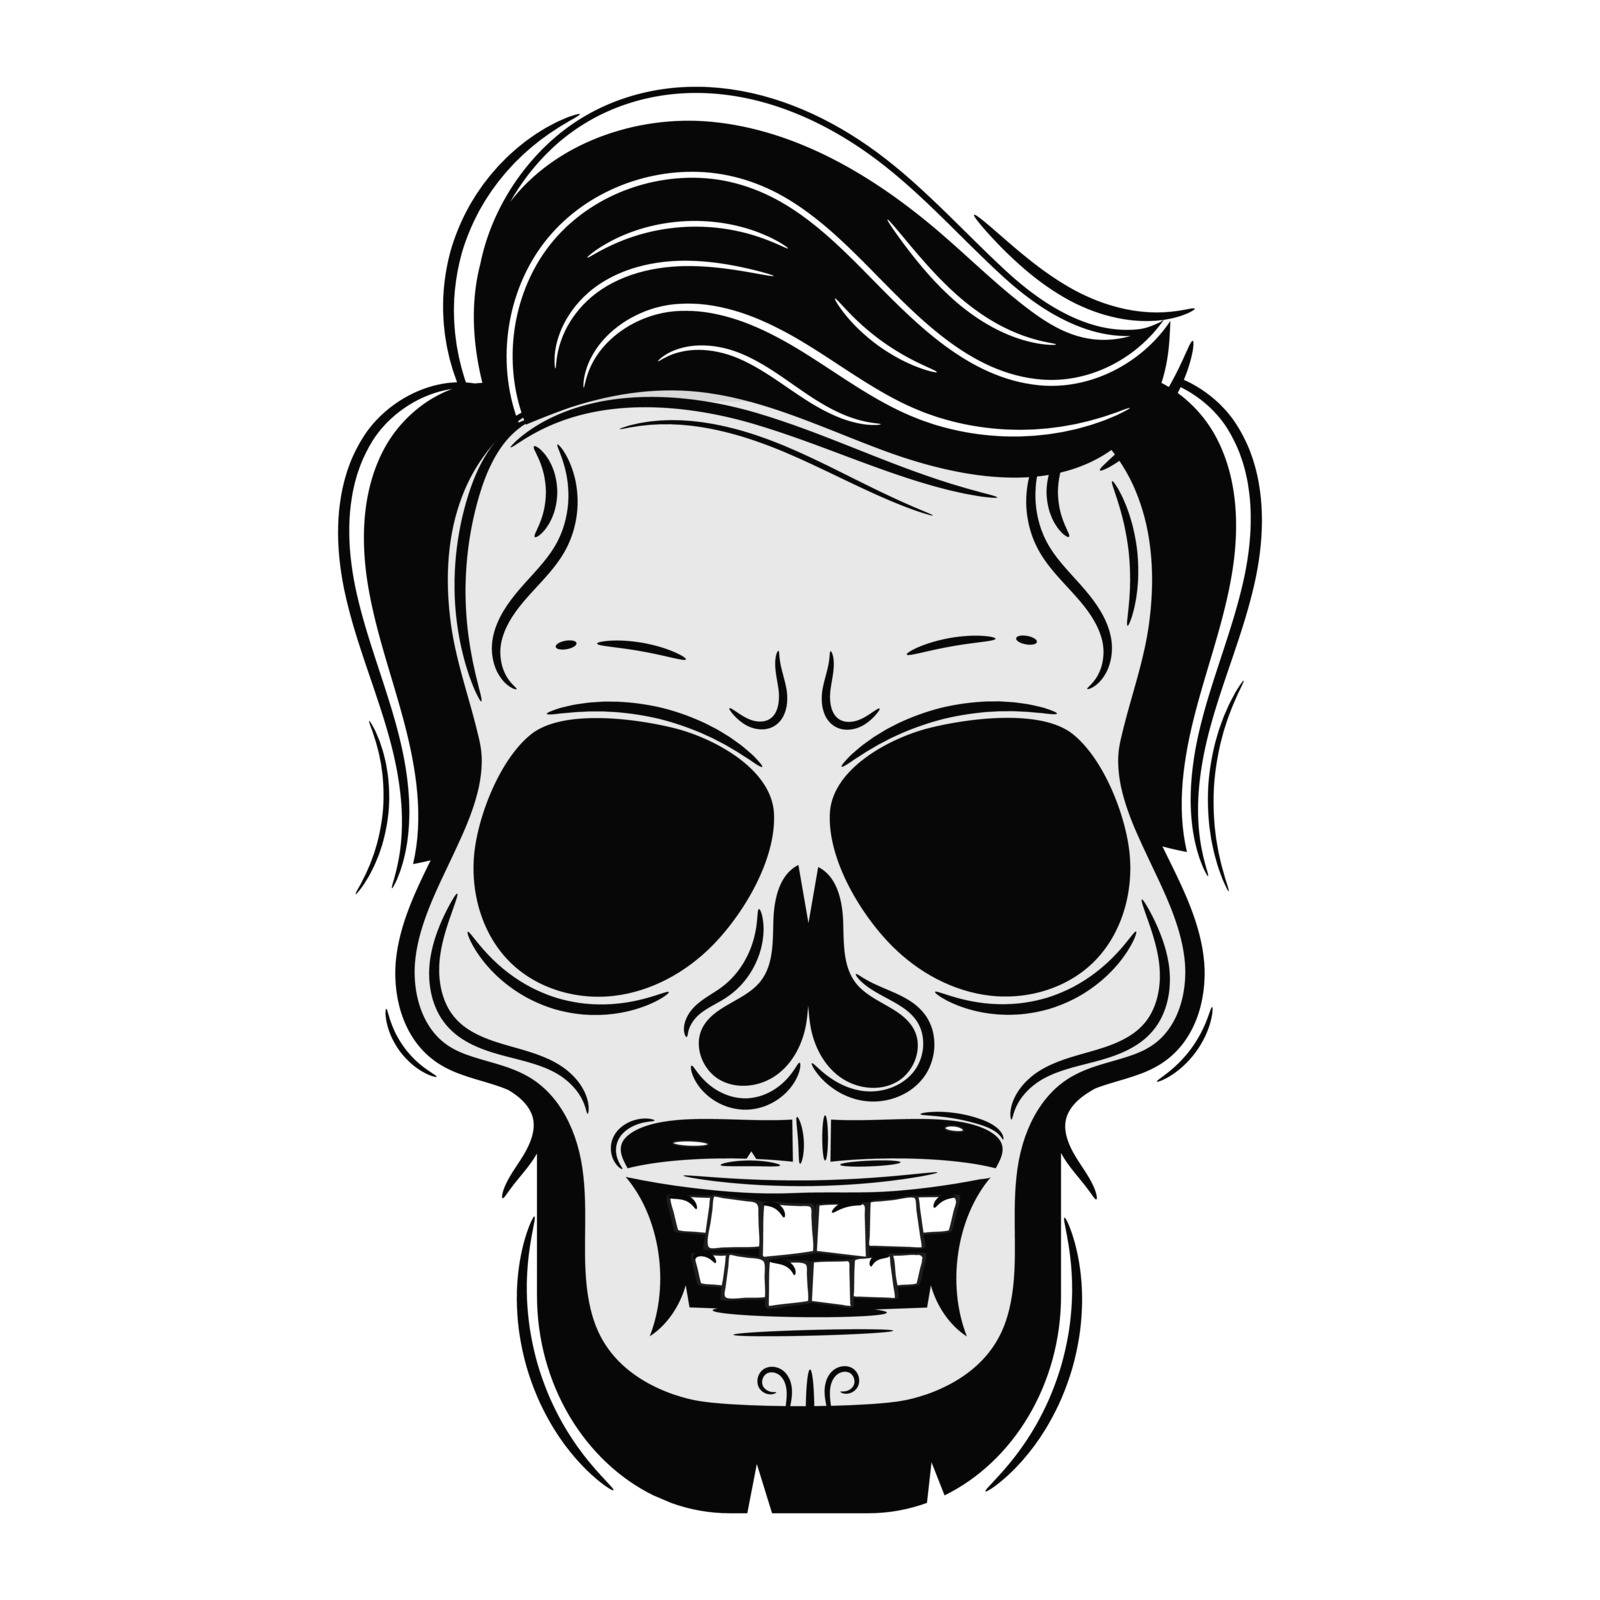 Beard Men Face with Skull Tattoo Illustration by IaroslavBrylov